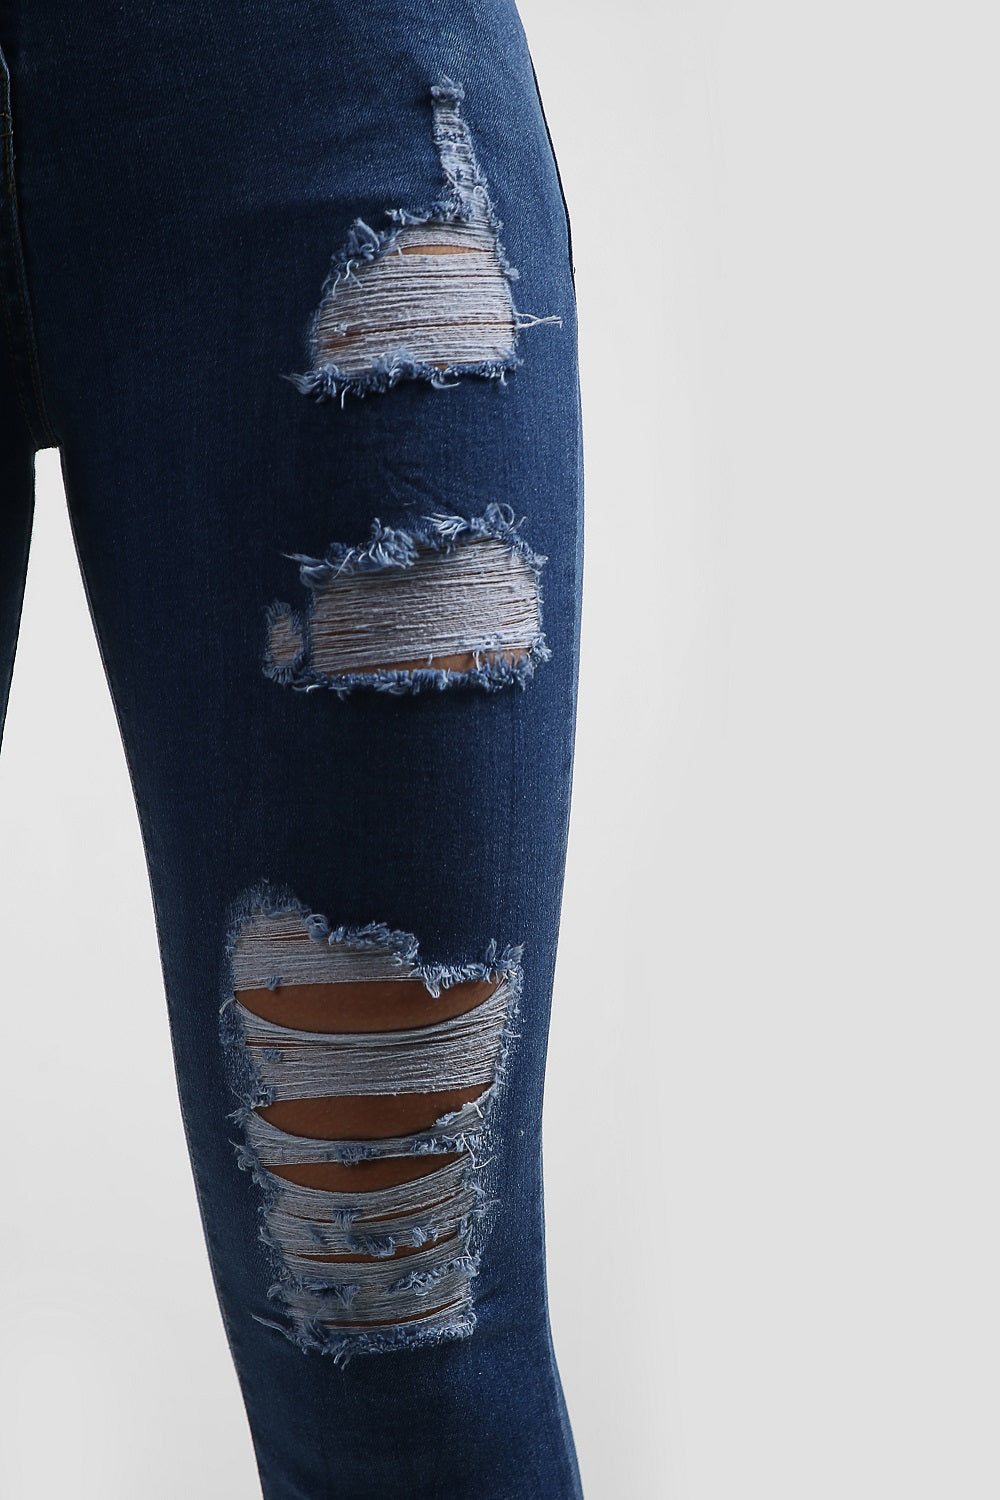 Denim Blue Multi Slash Distressed Thread High Waist Jeans - Nyah - Storm Desire